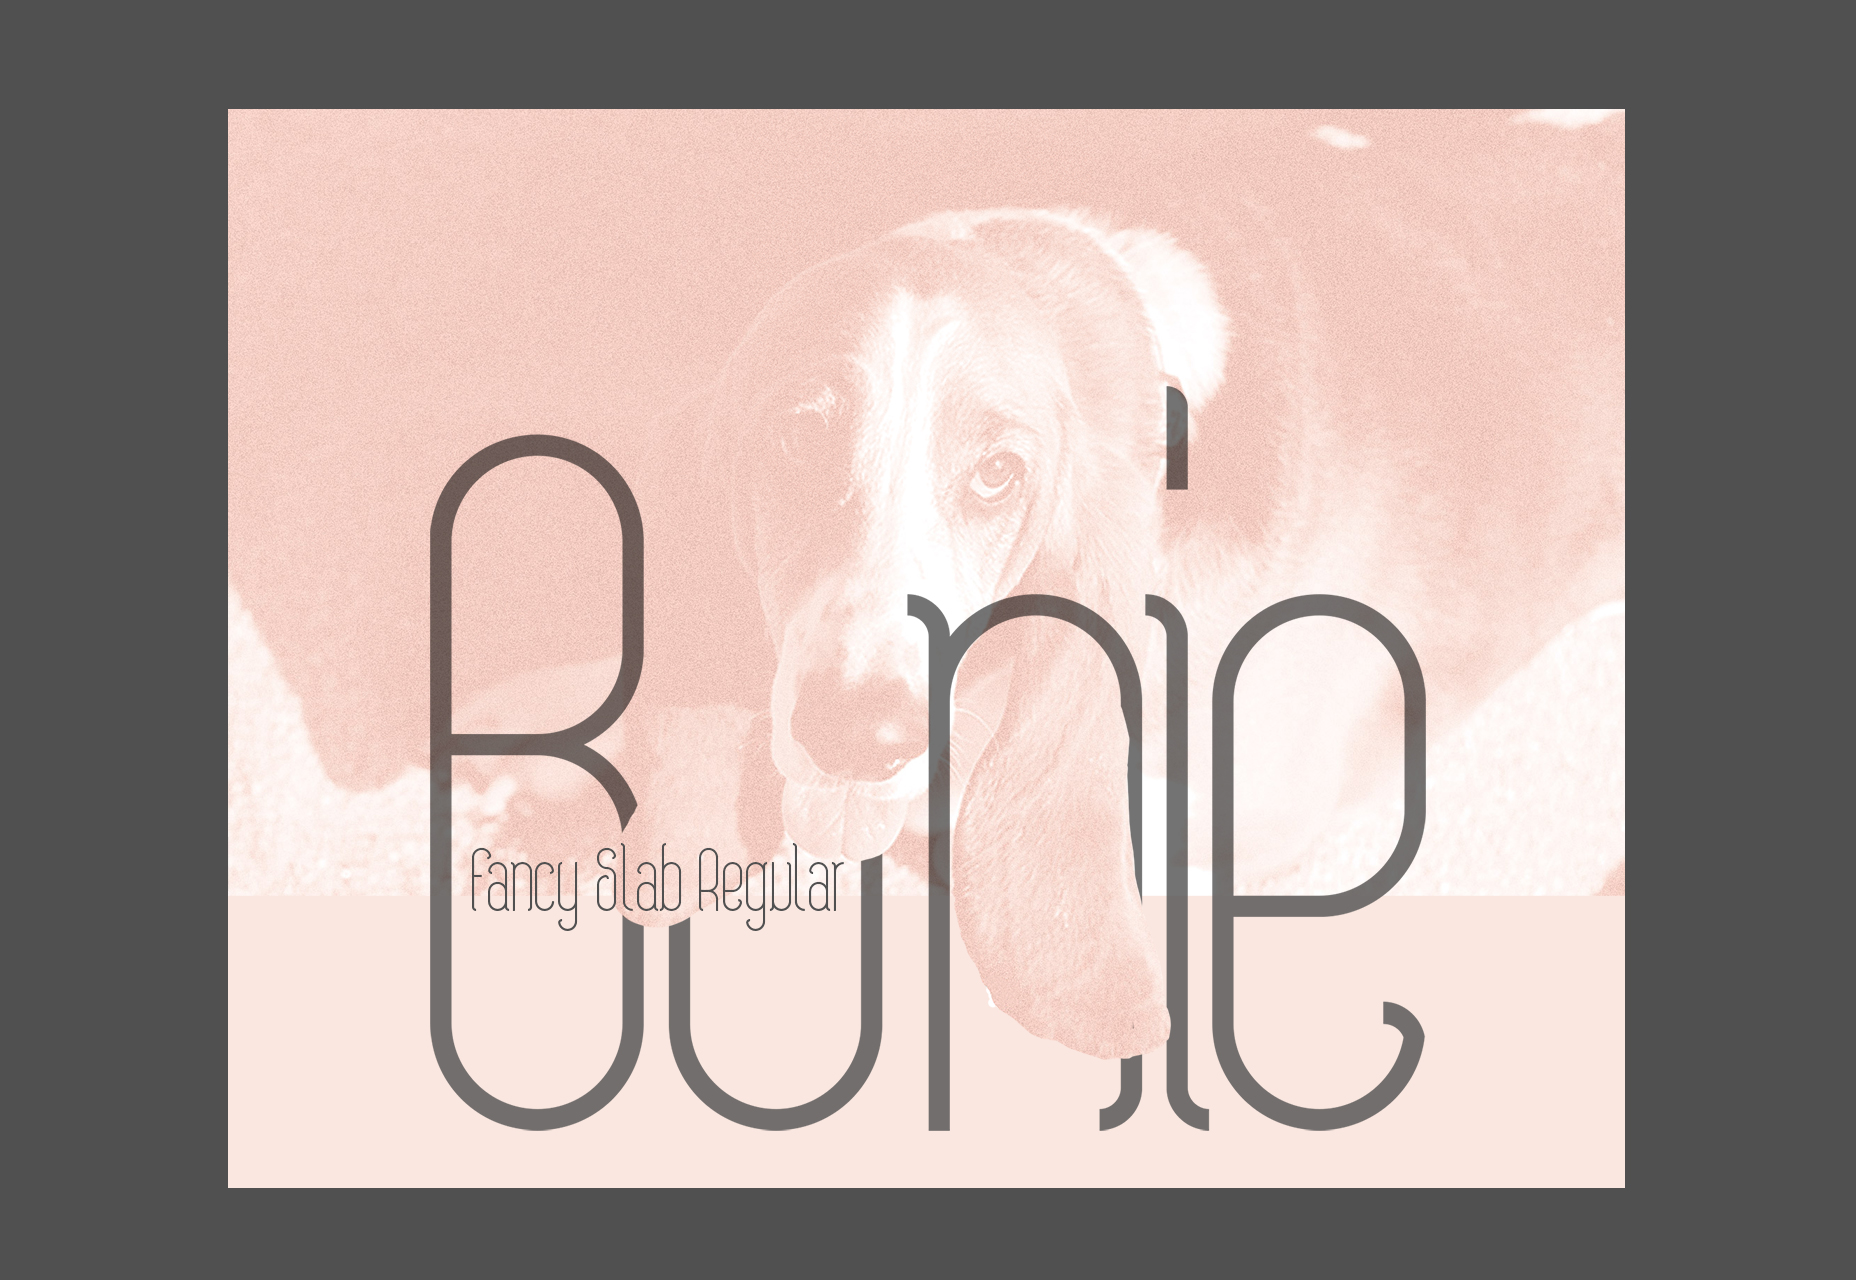 Bonie: Fancy Slab Regular Typeface